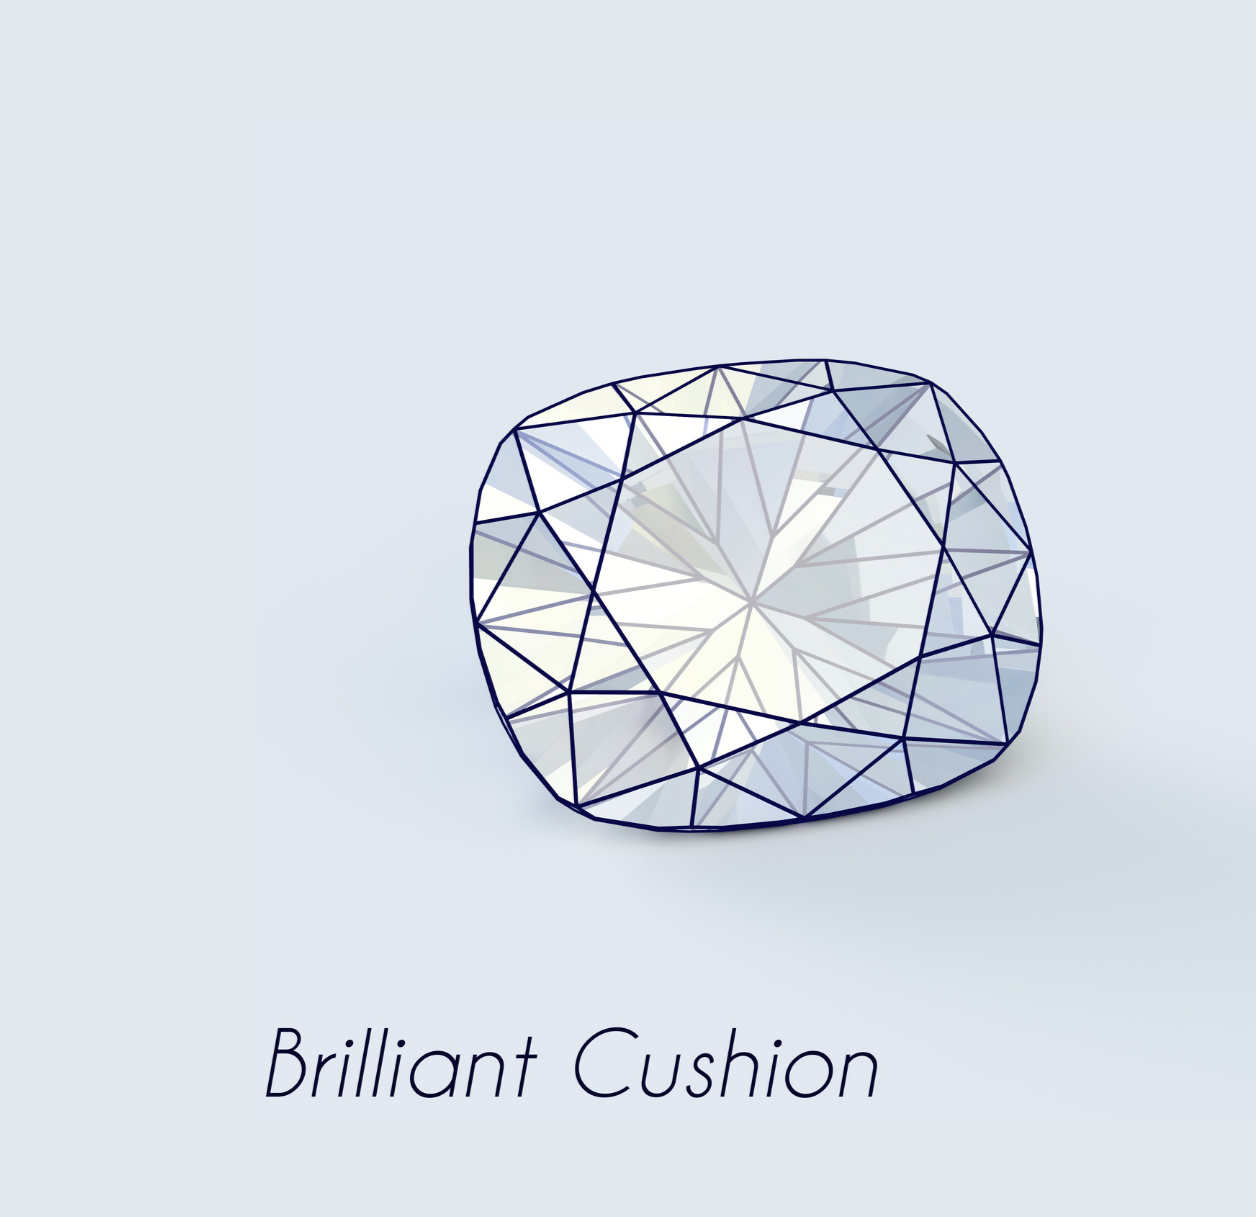 Cushion Cut Loose Moissanite Diamond